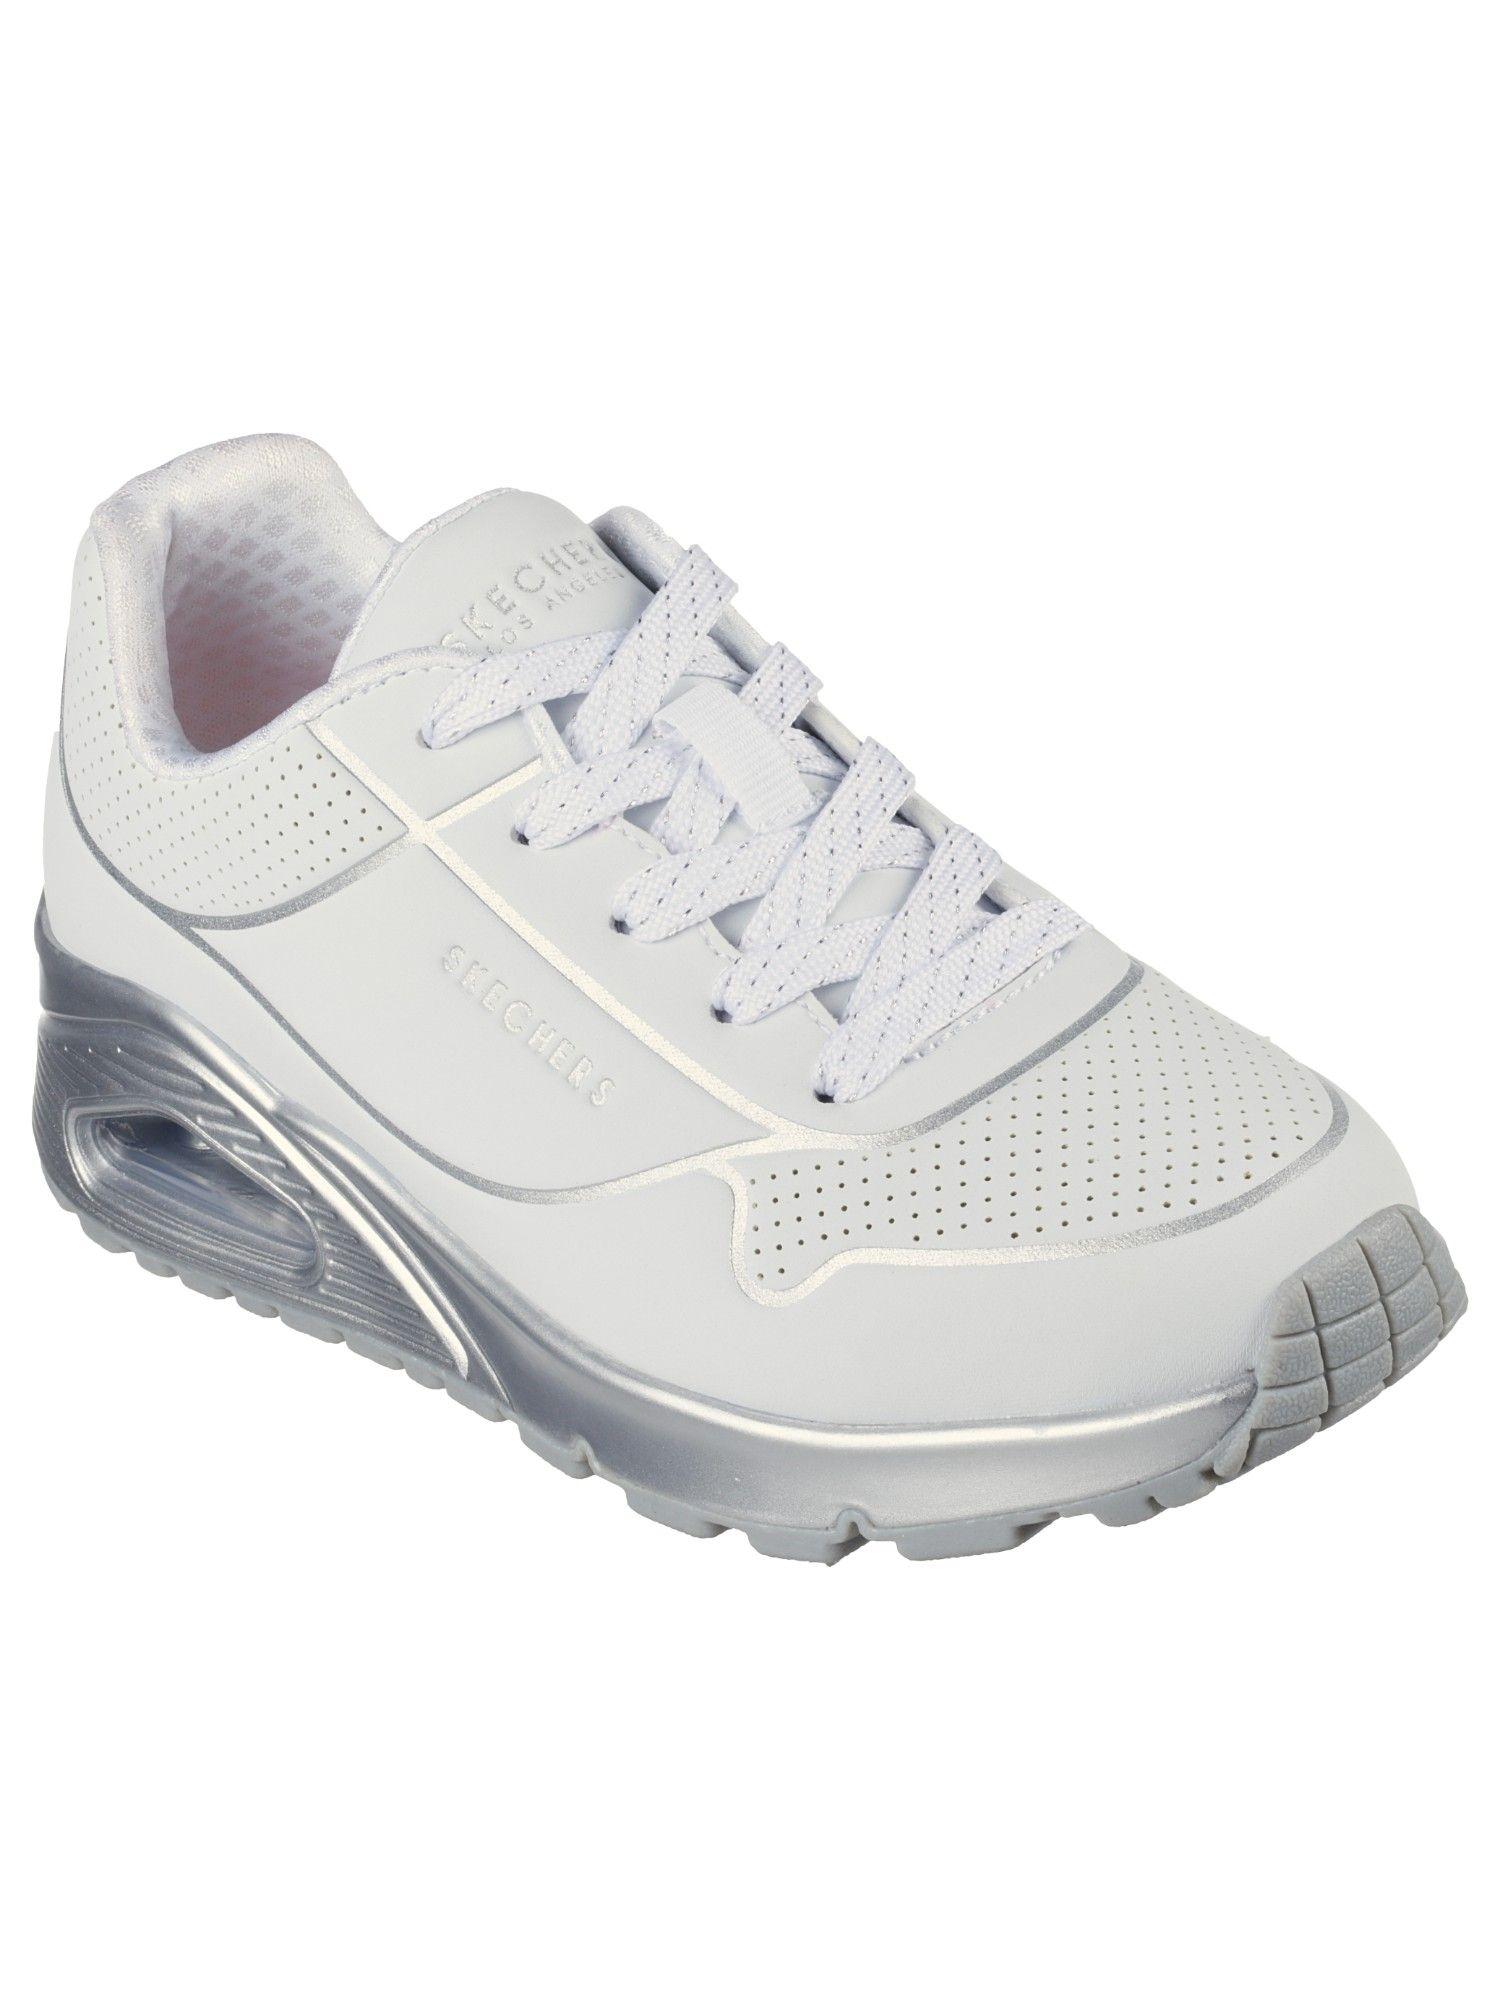 Girls Uno Gen1 Cool Heels White Casual Shoes